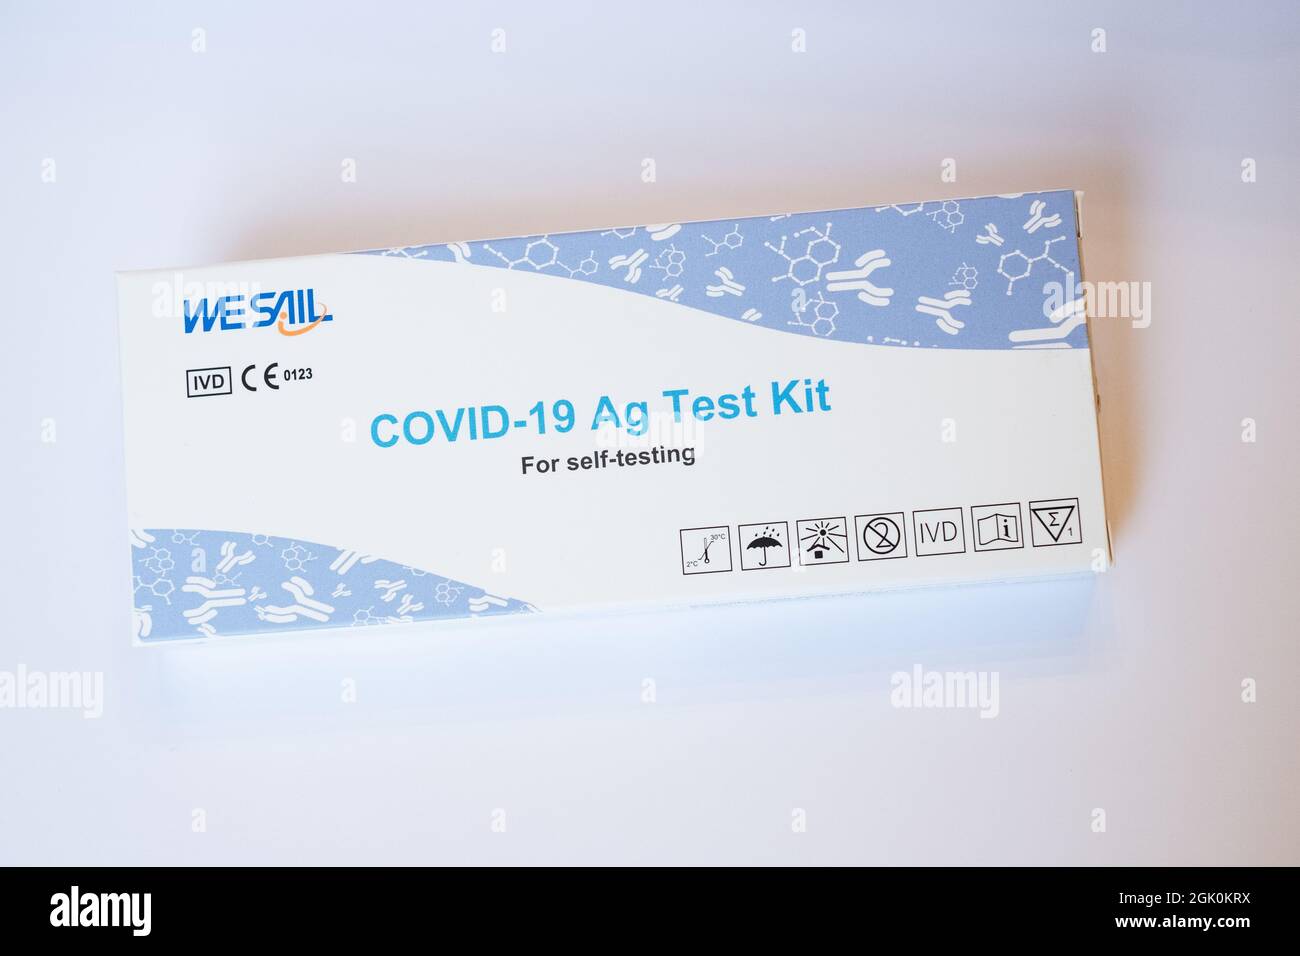 Tallinn, Estonia - September 12, 2021: COVID-19 Ag Test kit for self-testing. Corona virus diagnosis test package. Stock Photo